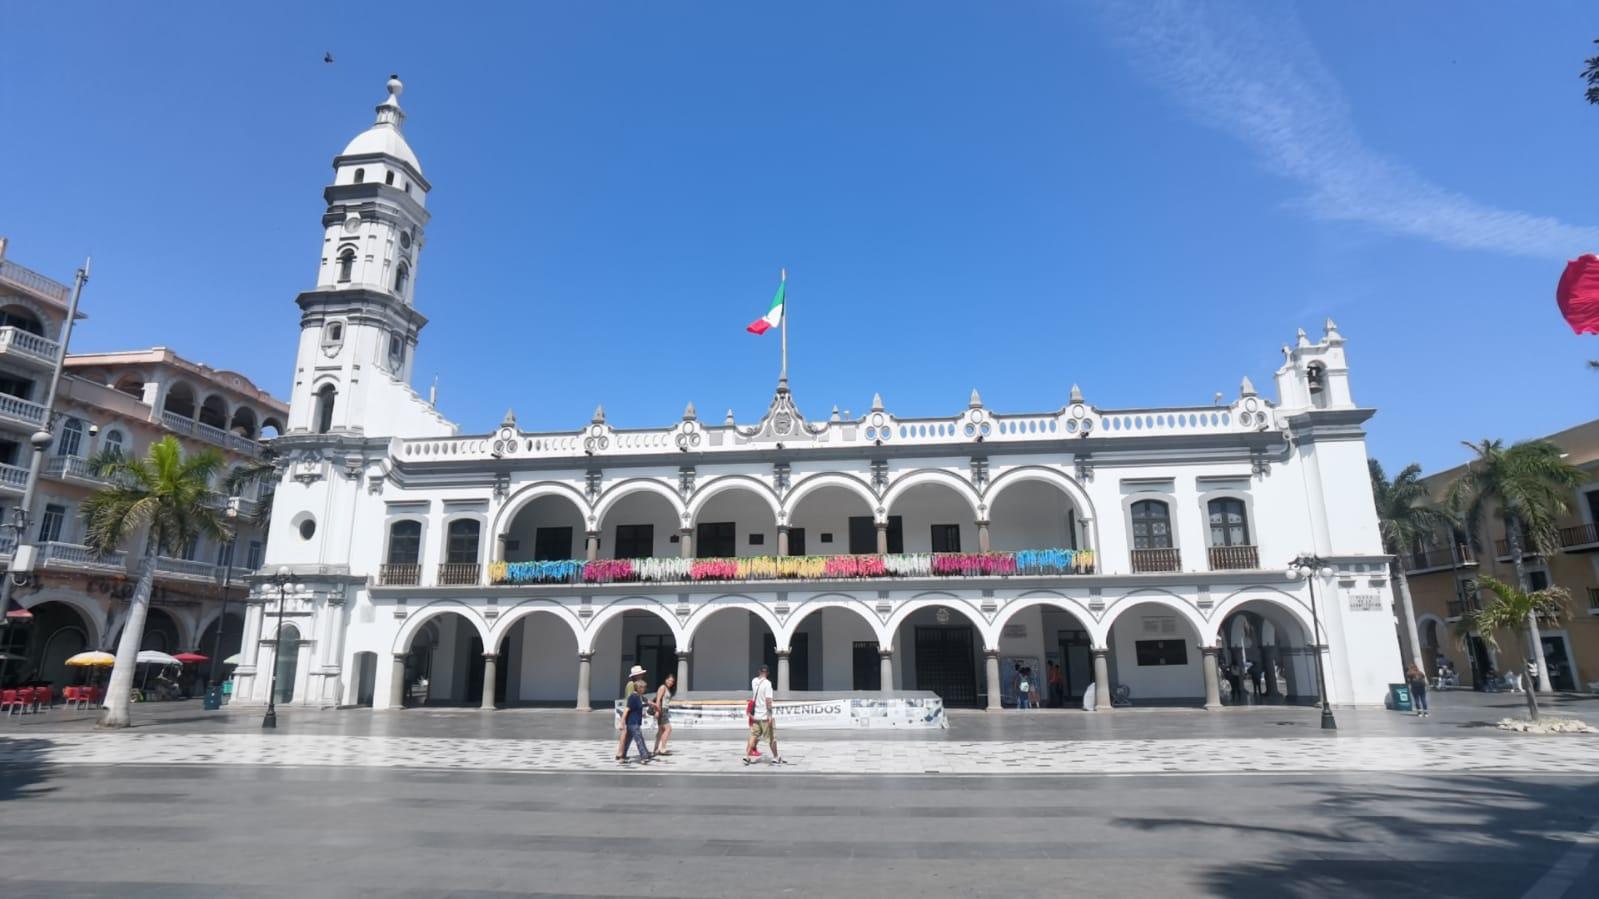 INAH retrasa rehabilitación del centro histórico de Veracruz: Alcaldesa